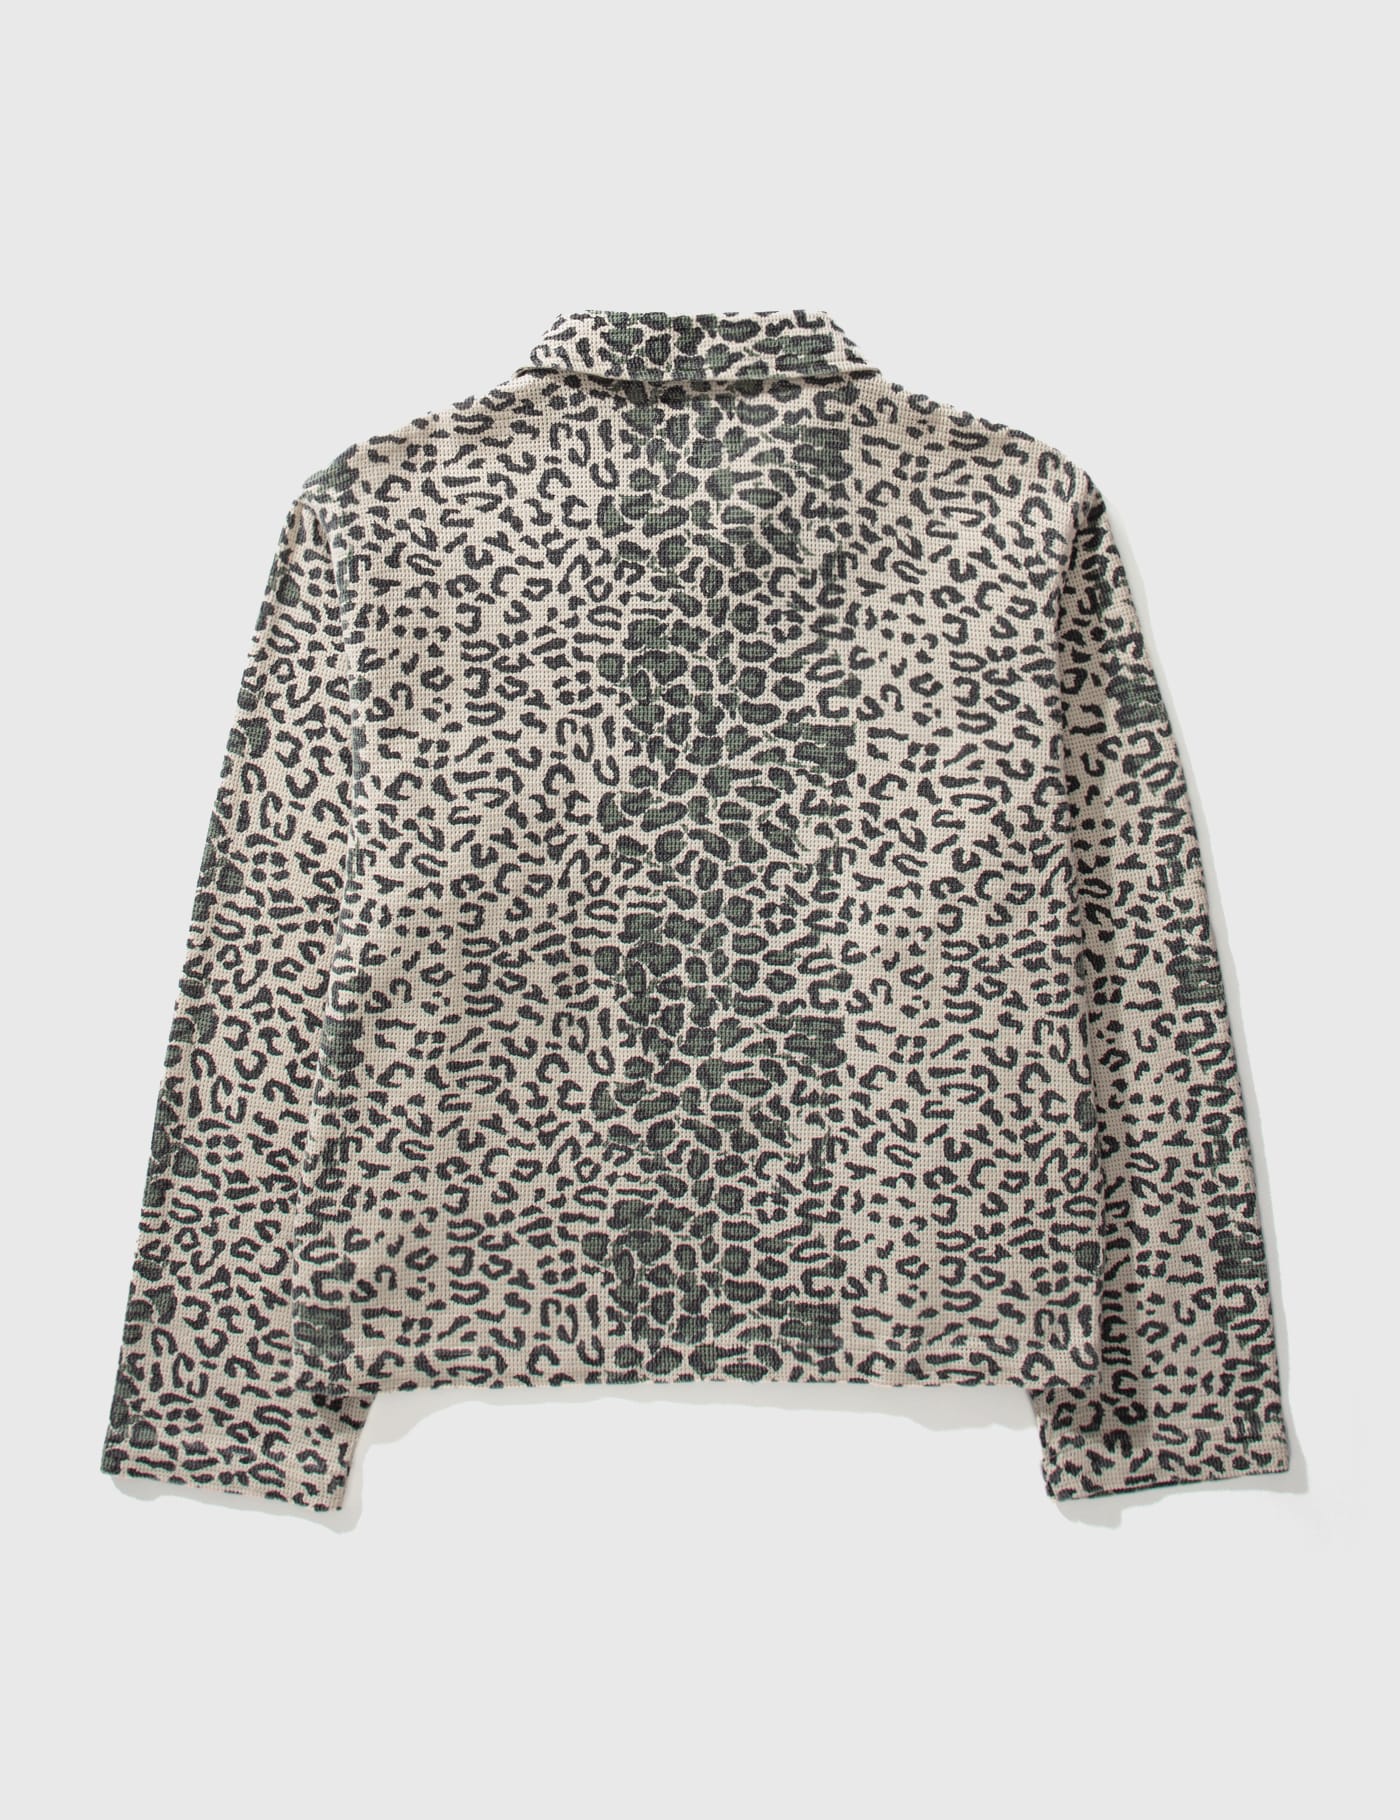 Stüssy - Leopard Mesh Zip Jacket | HBX - Globally Curated Fashion 